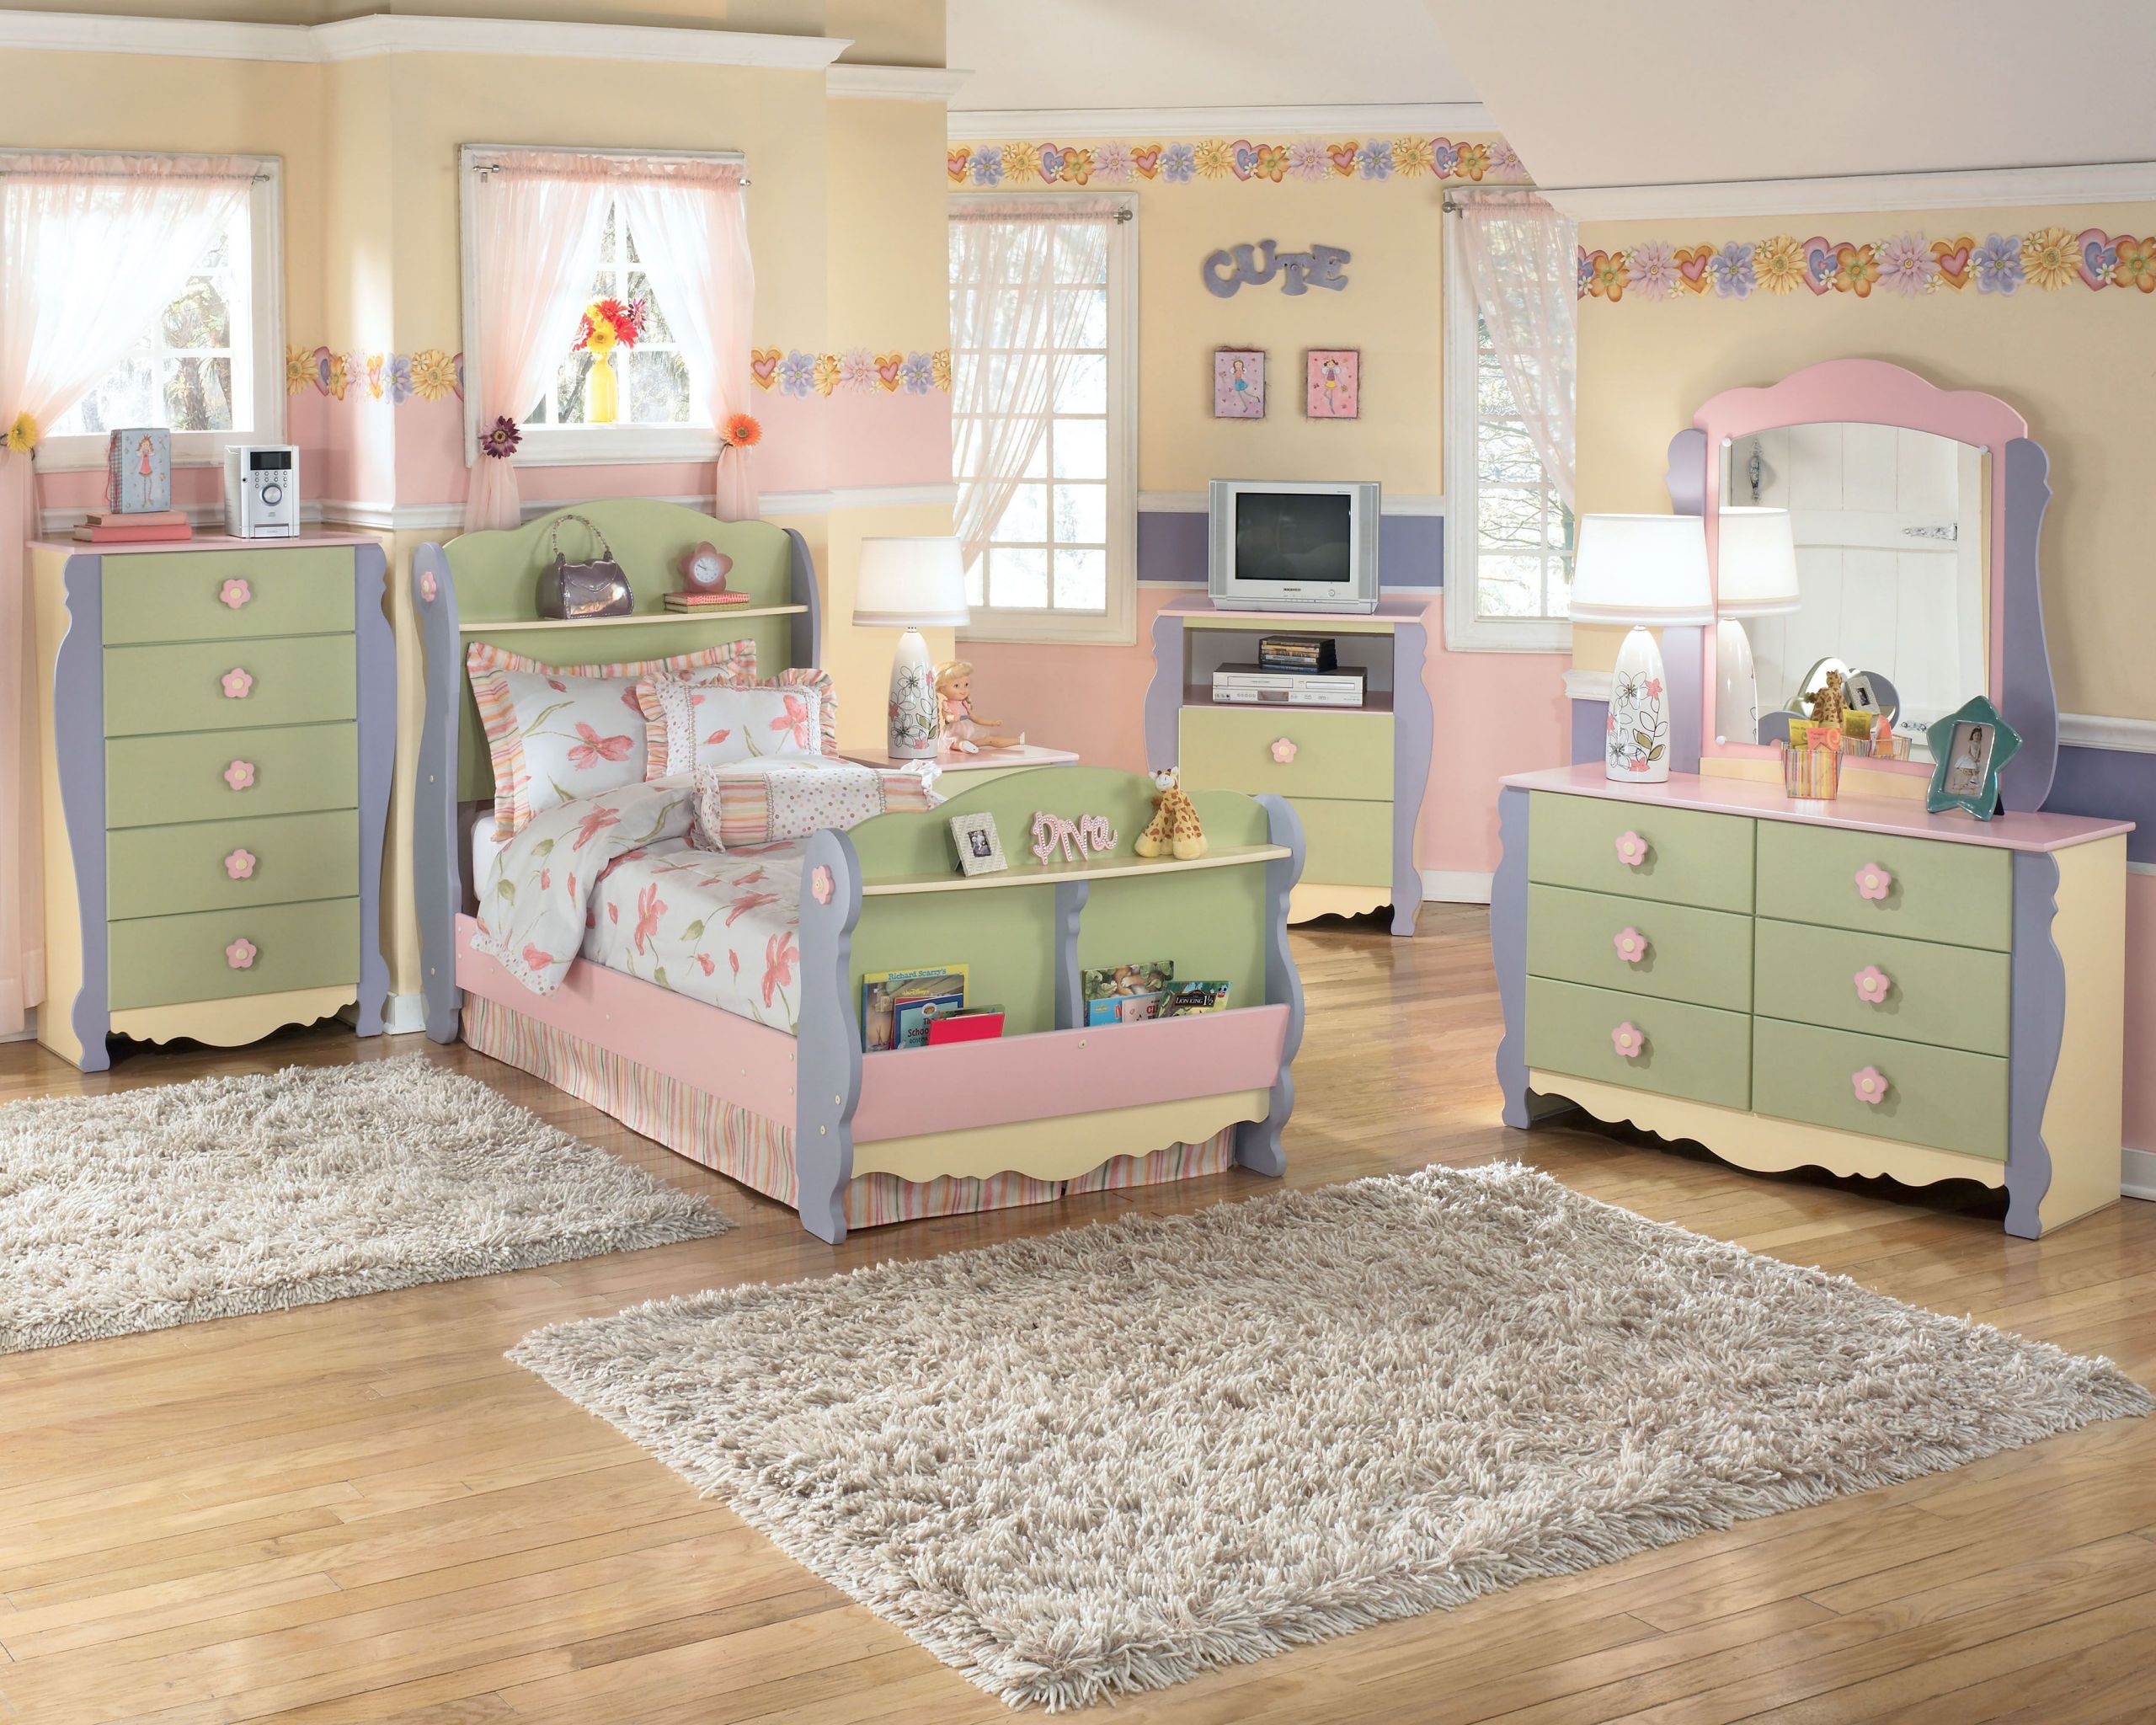 Ashley Furniture Kids Bedroom Sets
 Such a sweet Ashley Furniture HomeStore bedroom for a